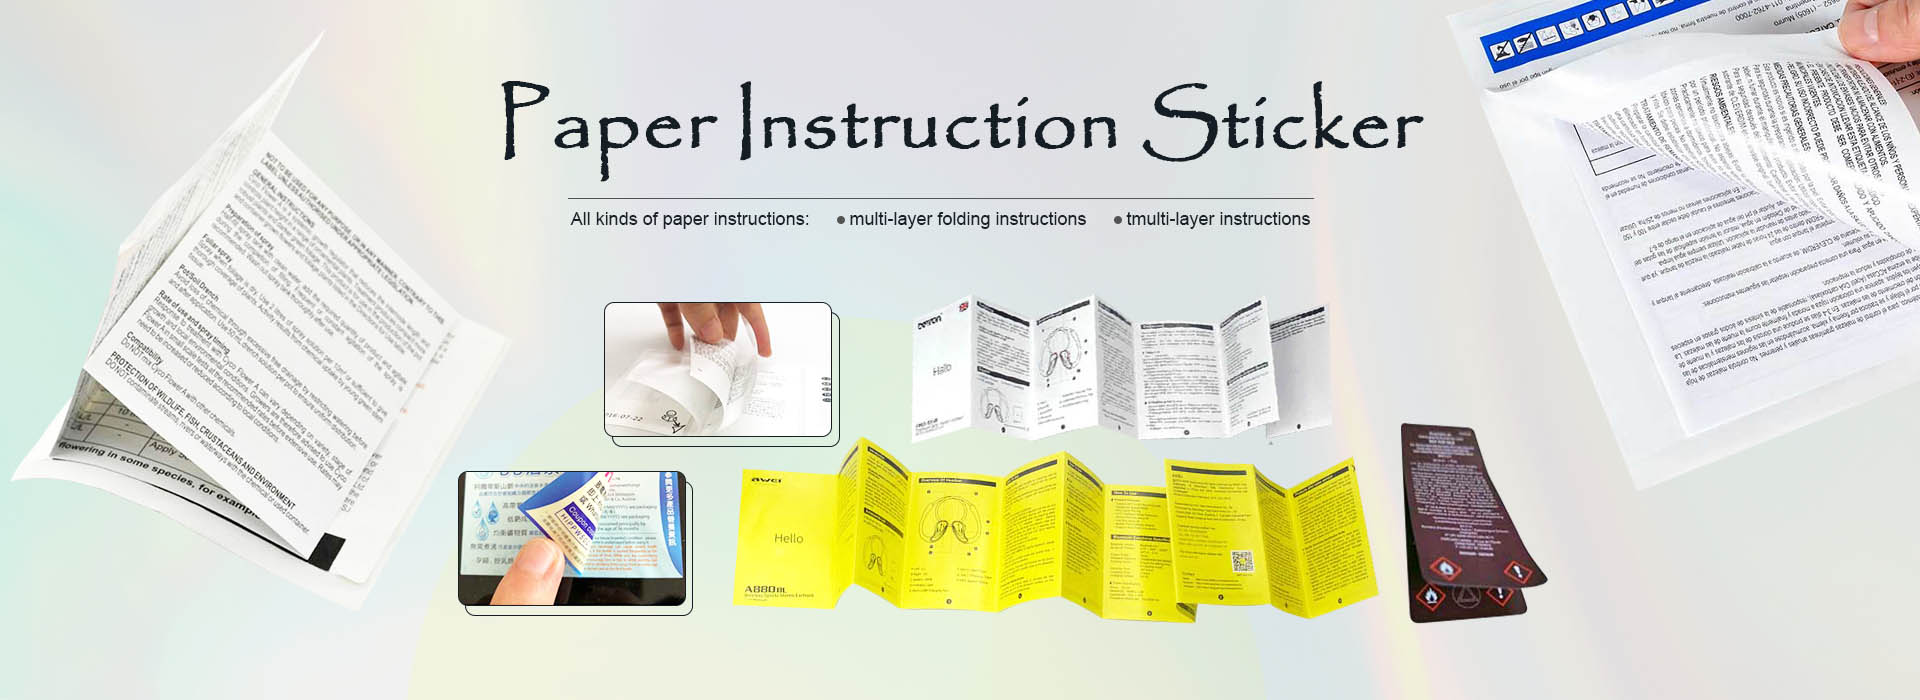 Paper Instruction Sticker Suppliers